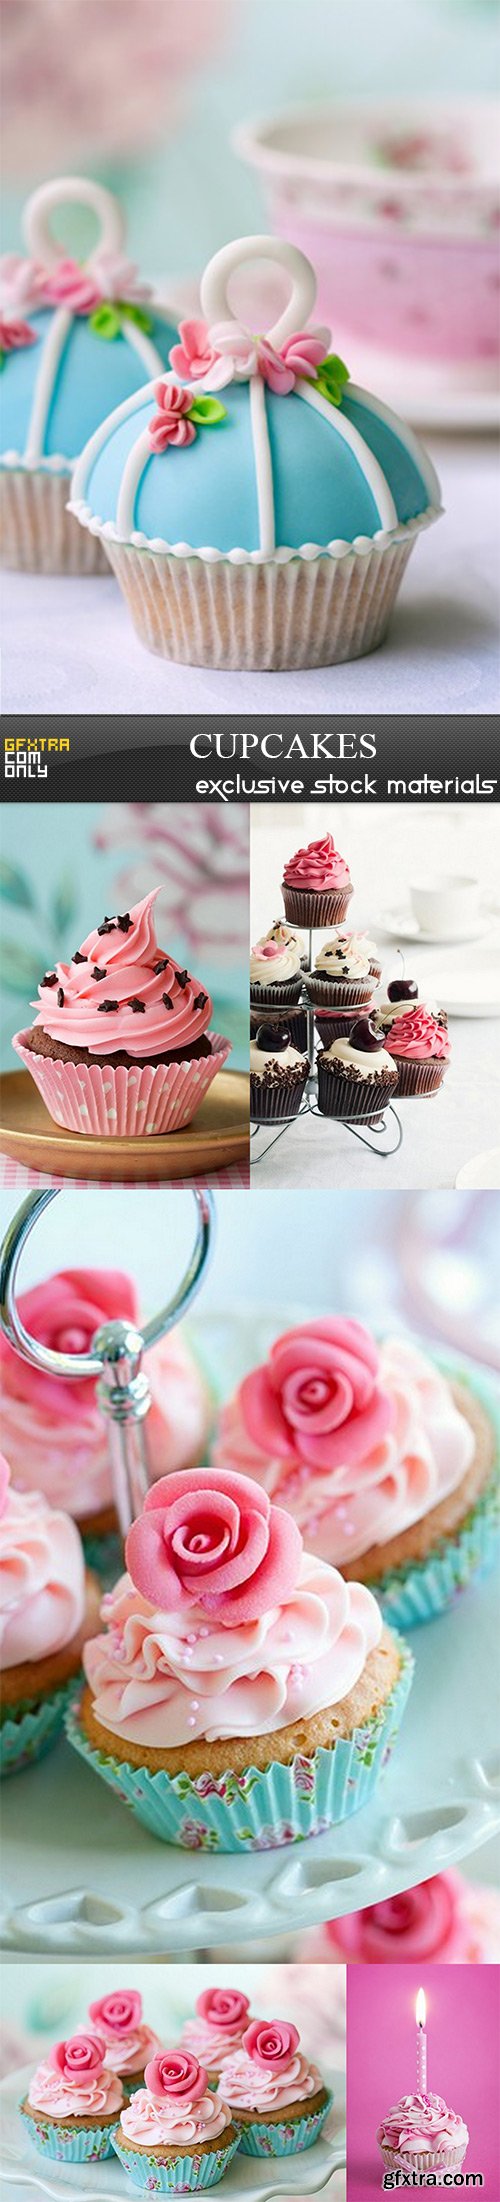 Cupcakes - 6 UHQ JPEG